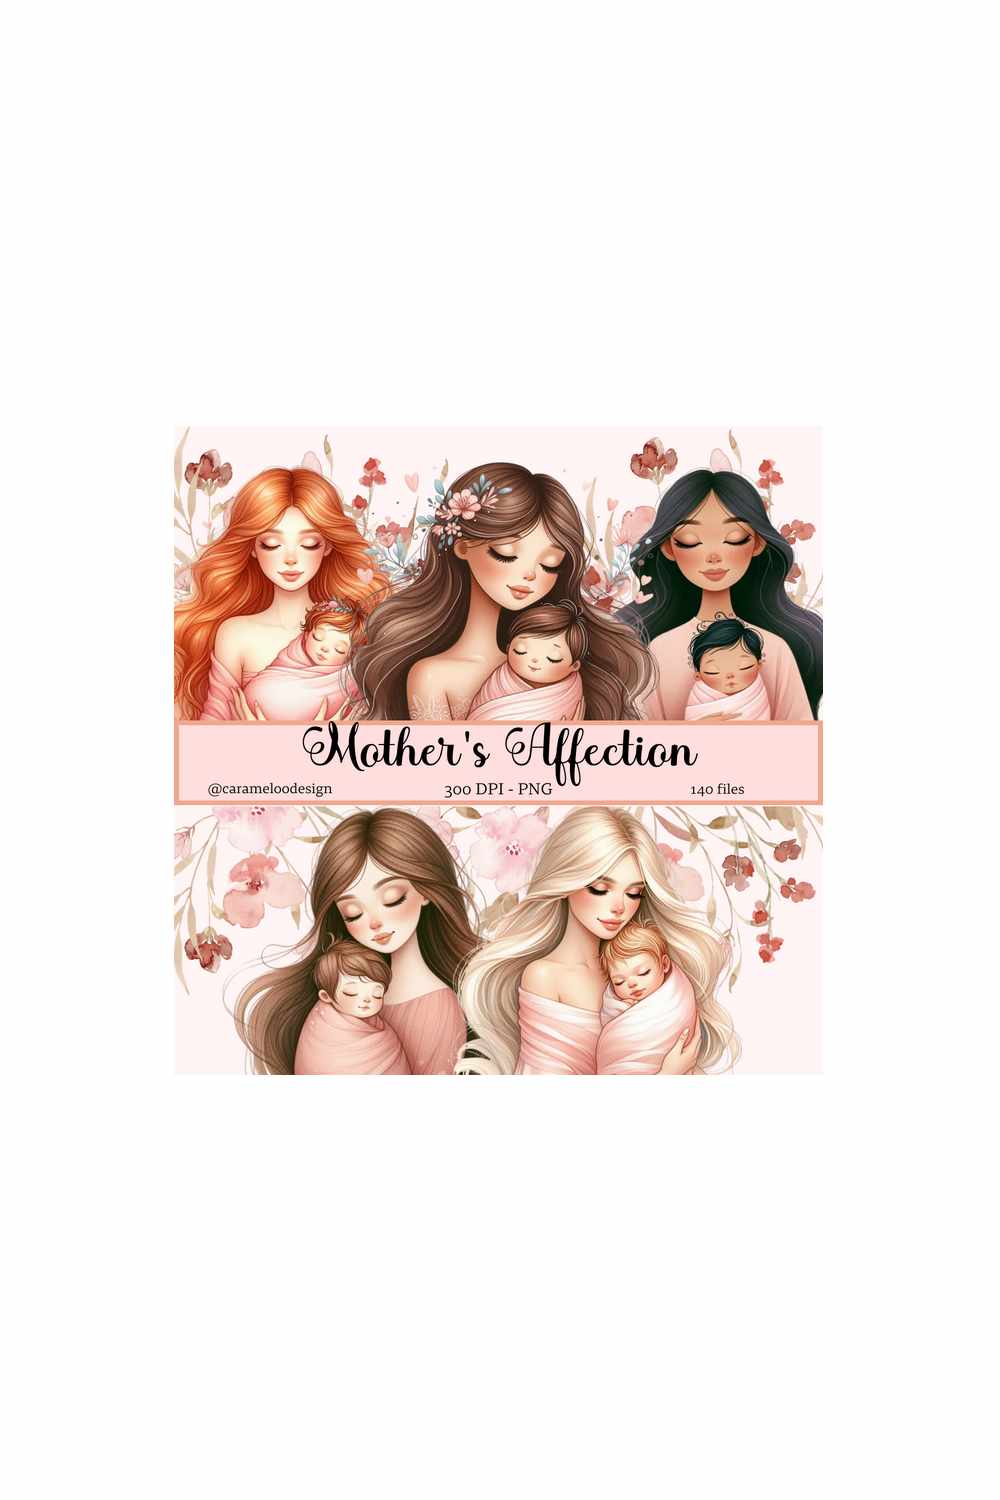 Mother's Affection Clip Art pinterest preview image.